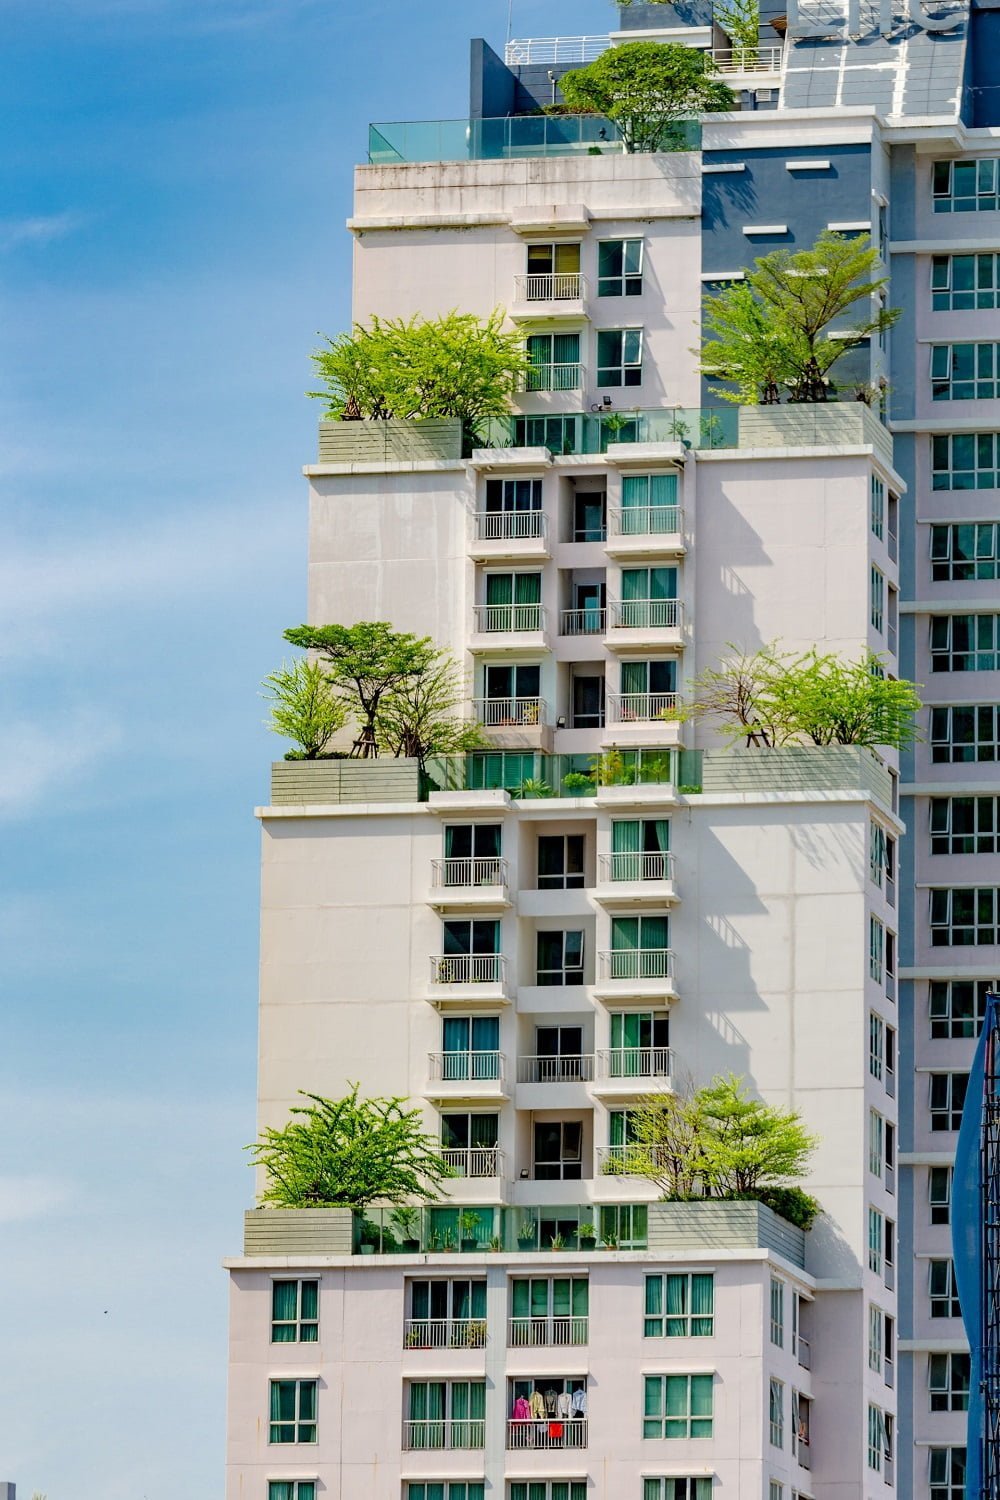 Sustainable Apartment Living: balcony gardens